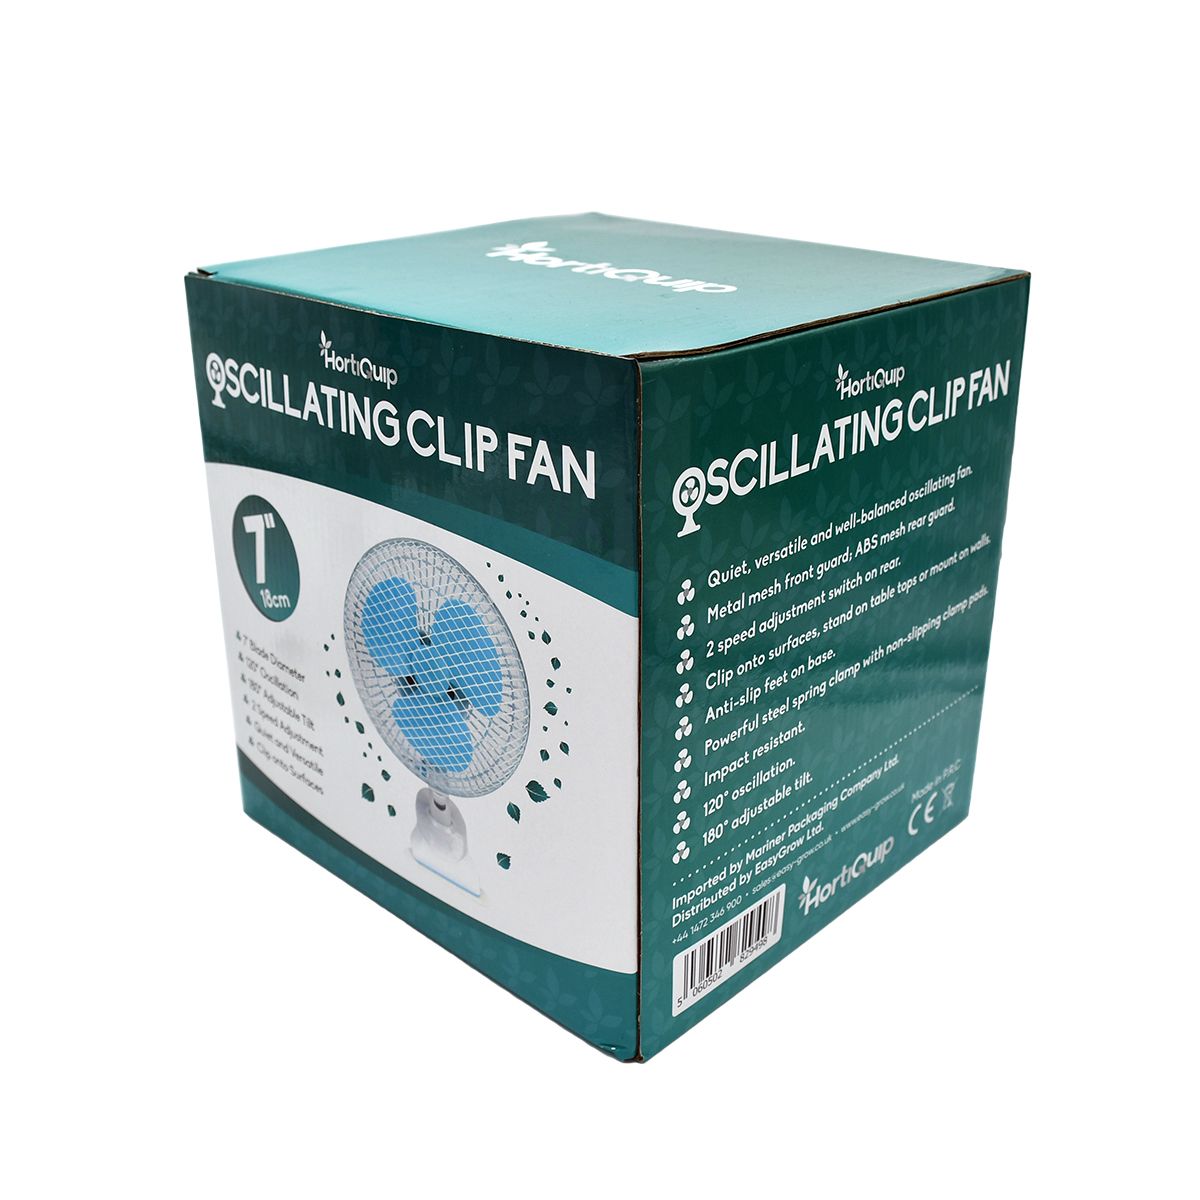 HortiQuip 7inch Oscillating Clip Fan